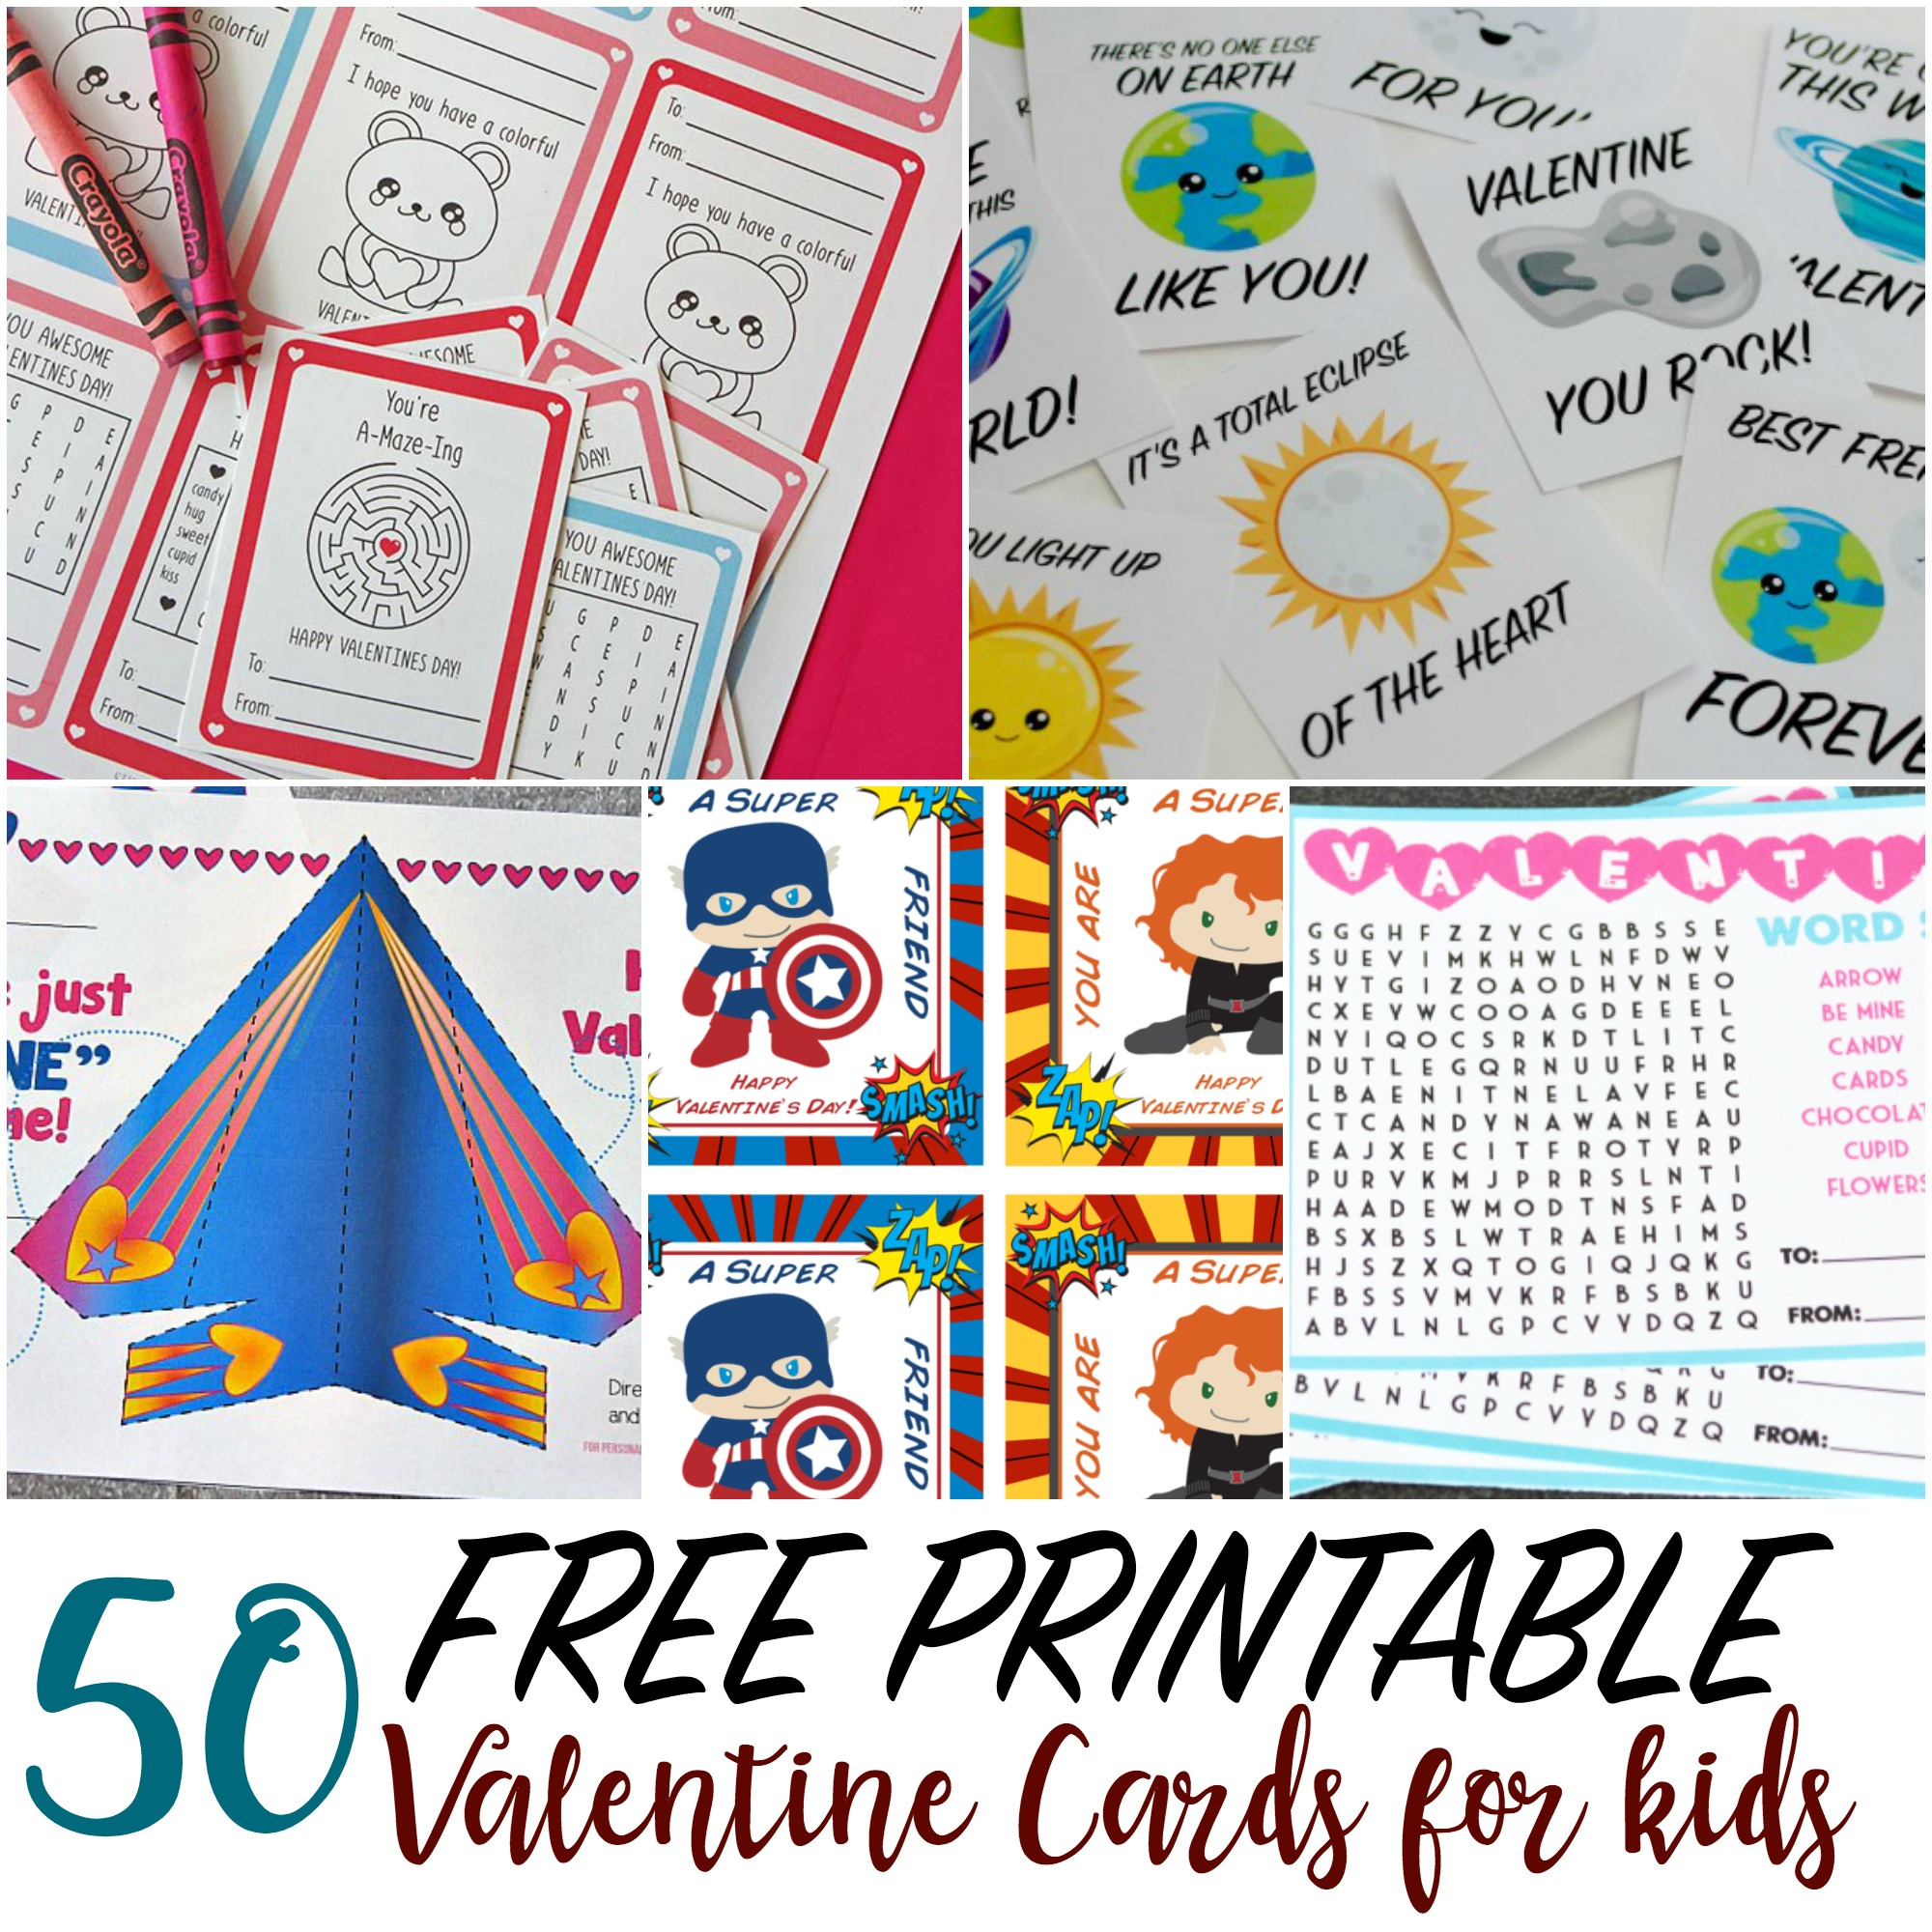 50 Printable Valentine Cards For Kids Regarding Valentine Card Template For Kids